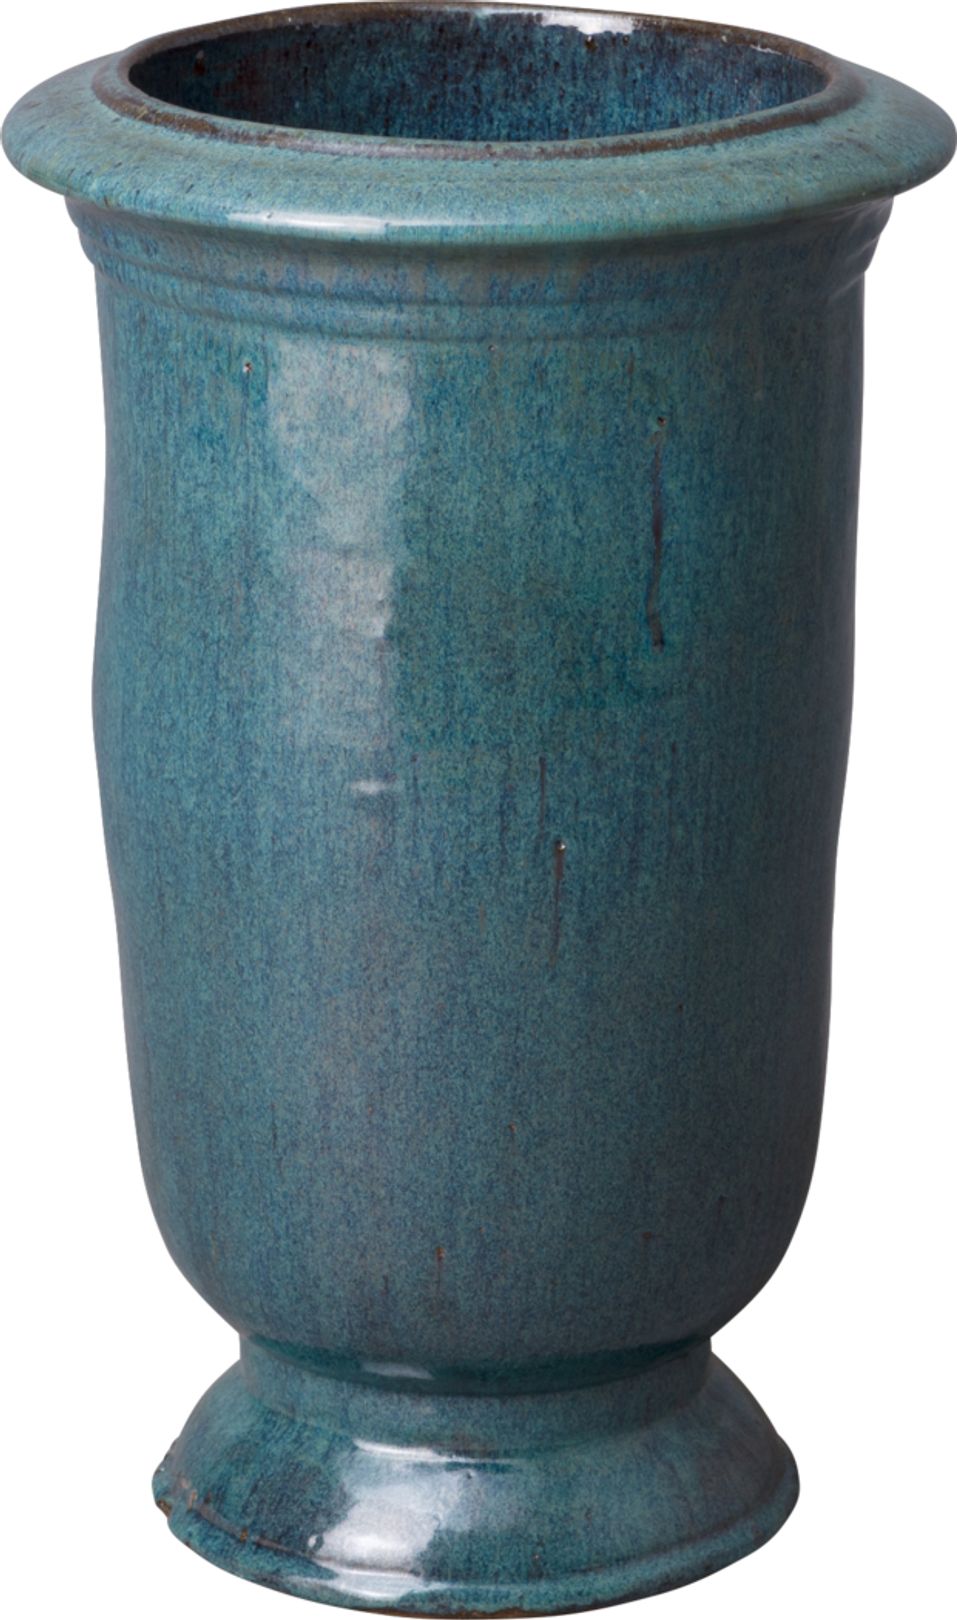 Photo of a blue tall narrow planter pot